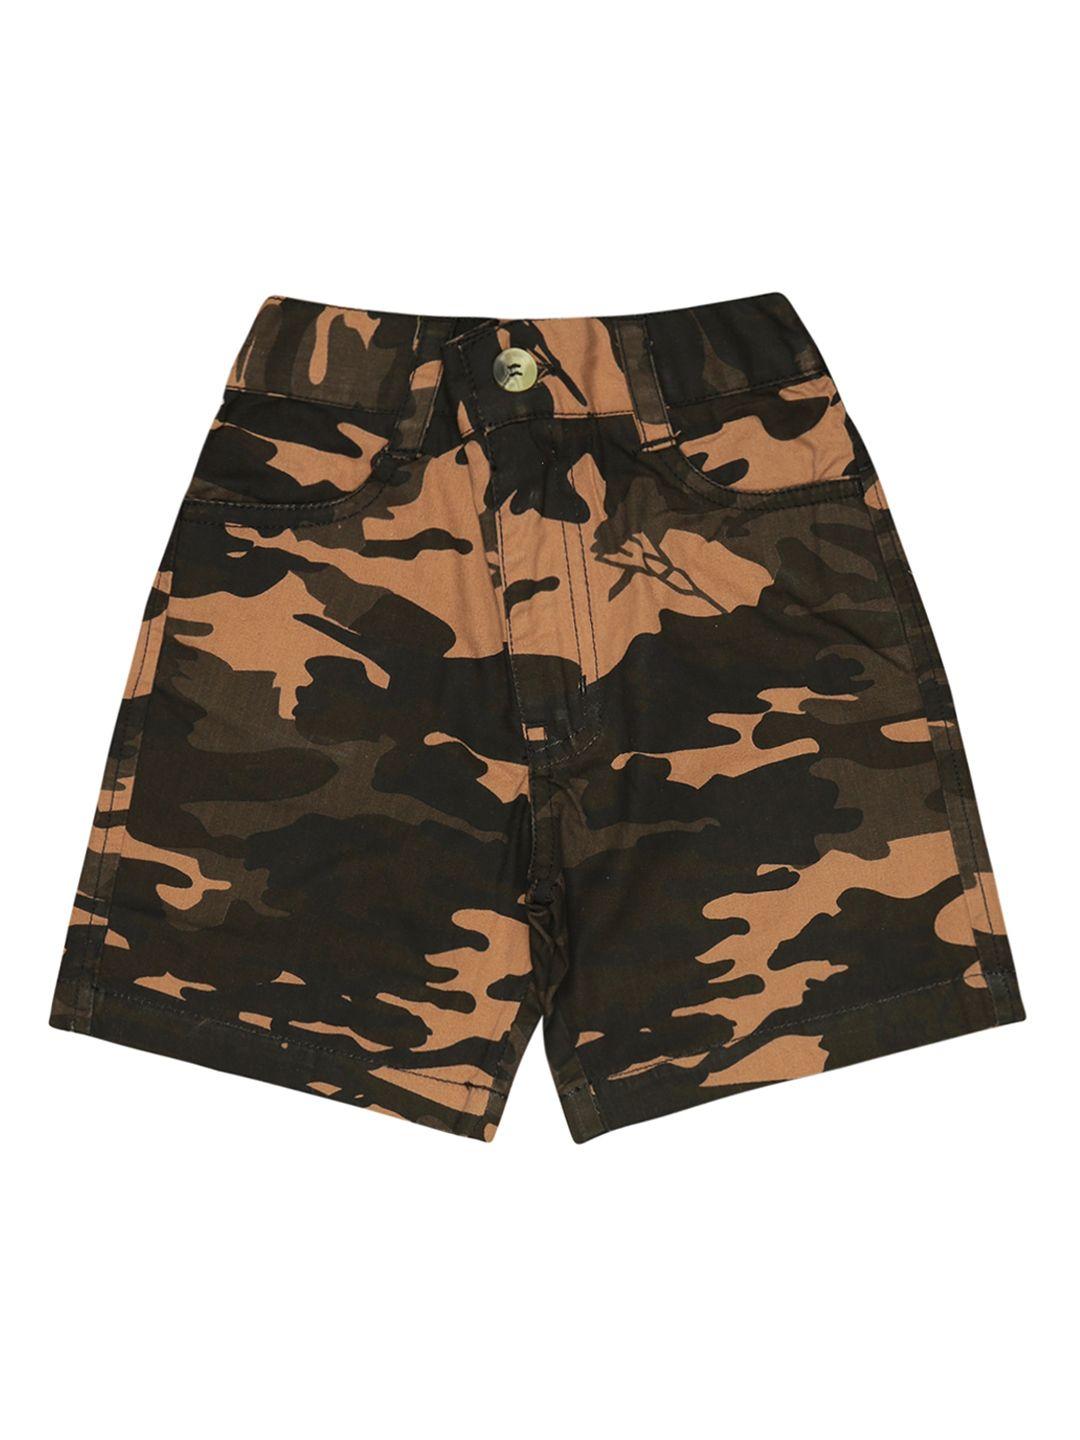 bodycare kids boys camouflage printed cotton shorts